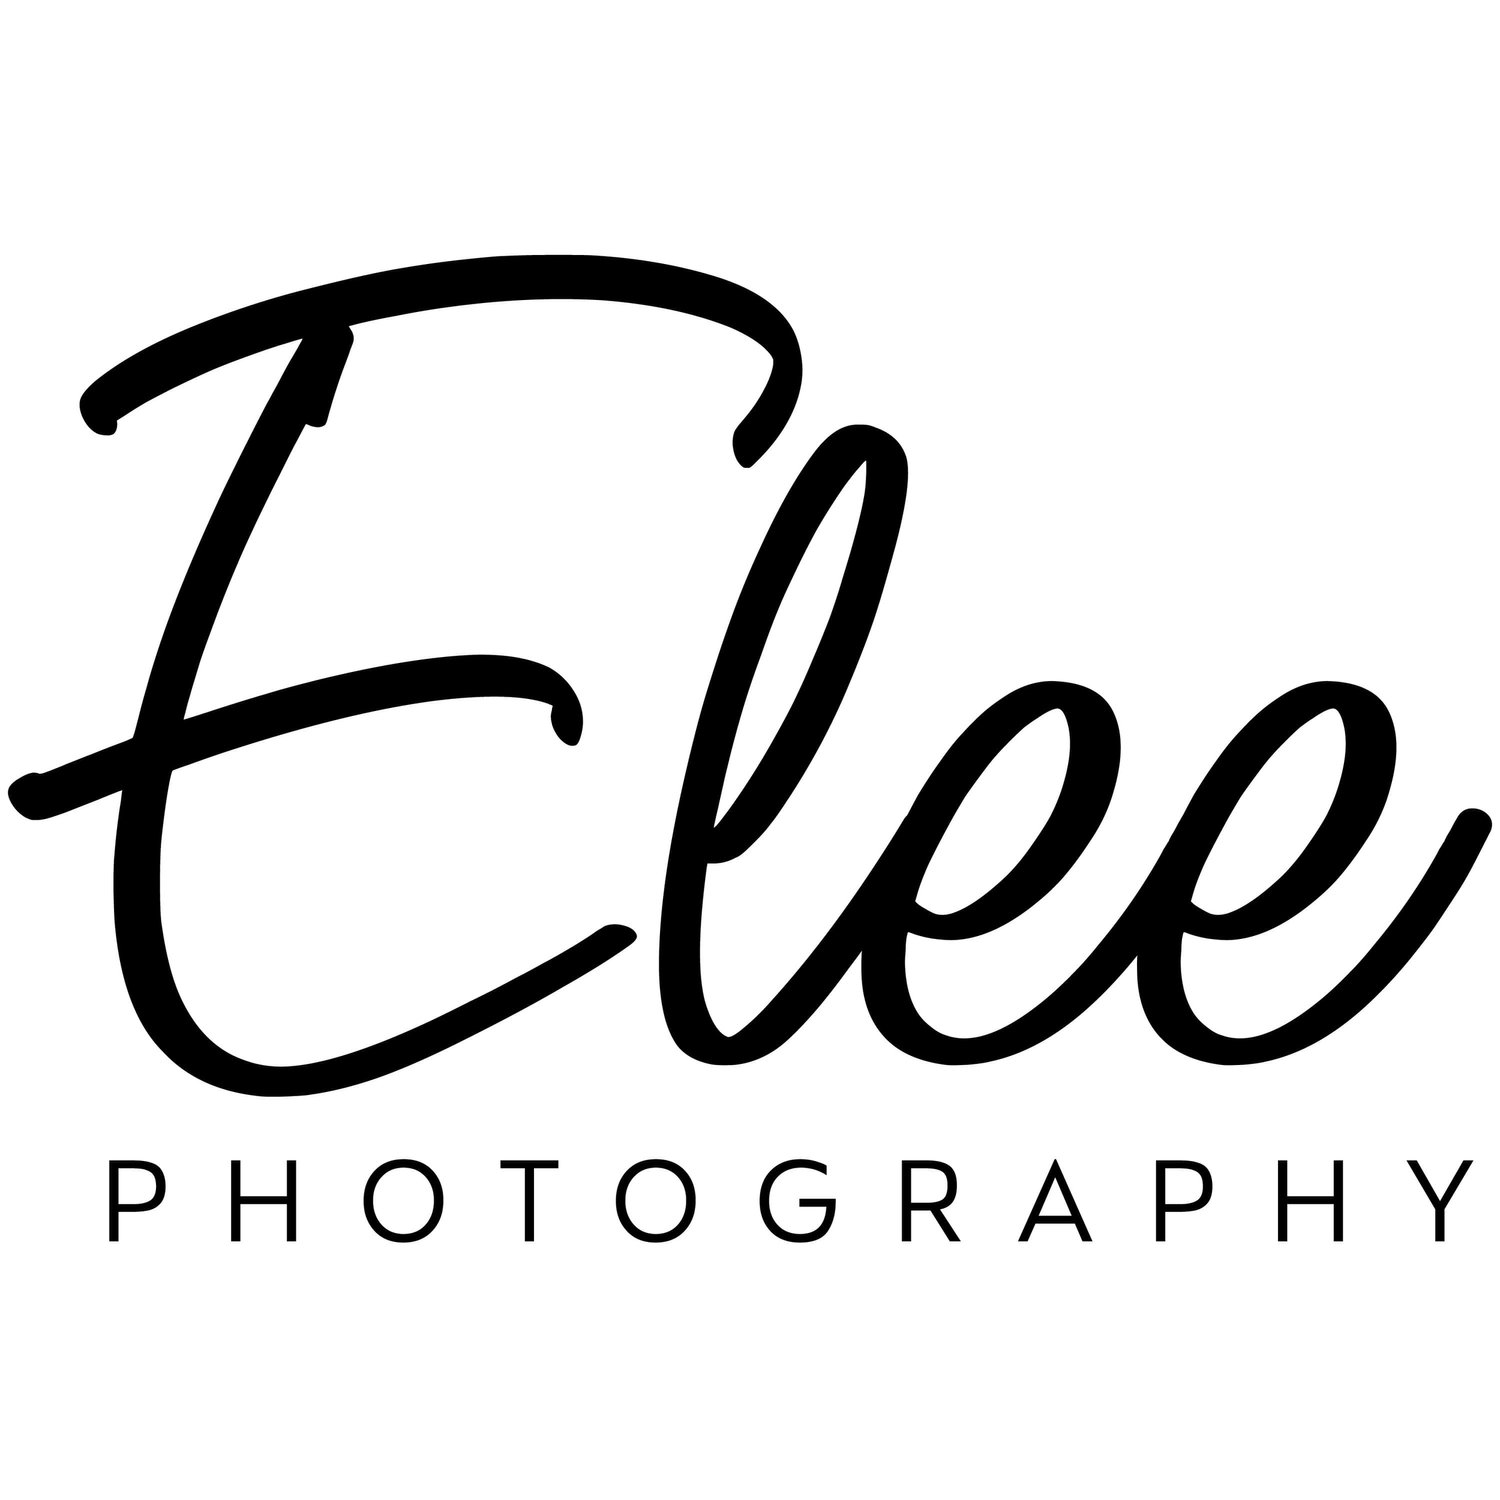 elee Photography